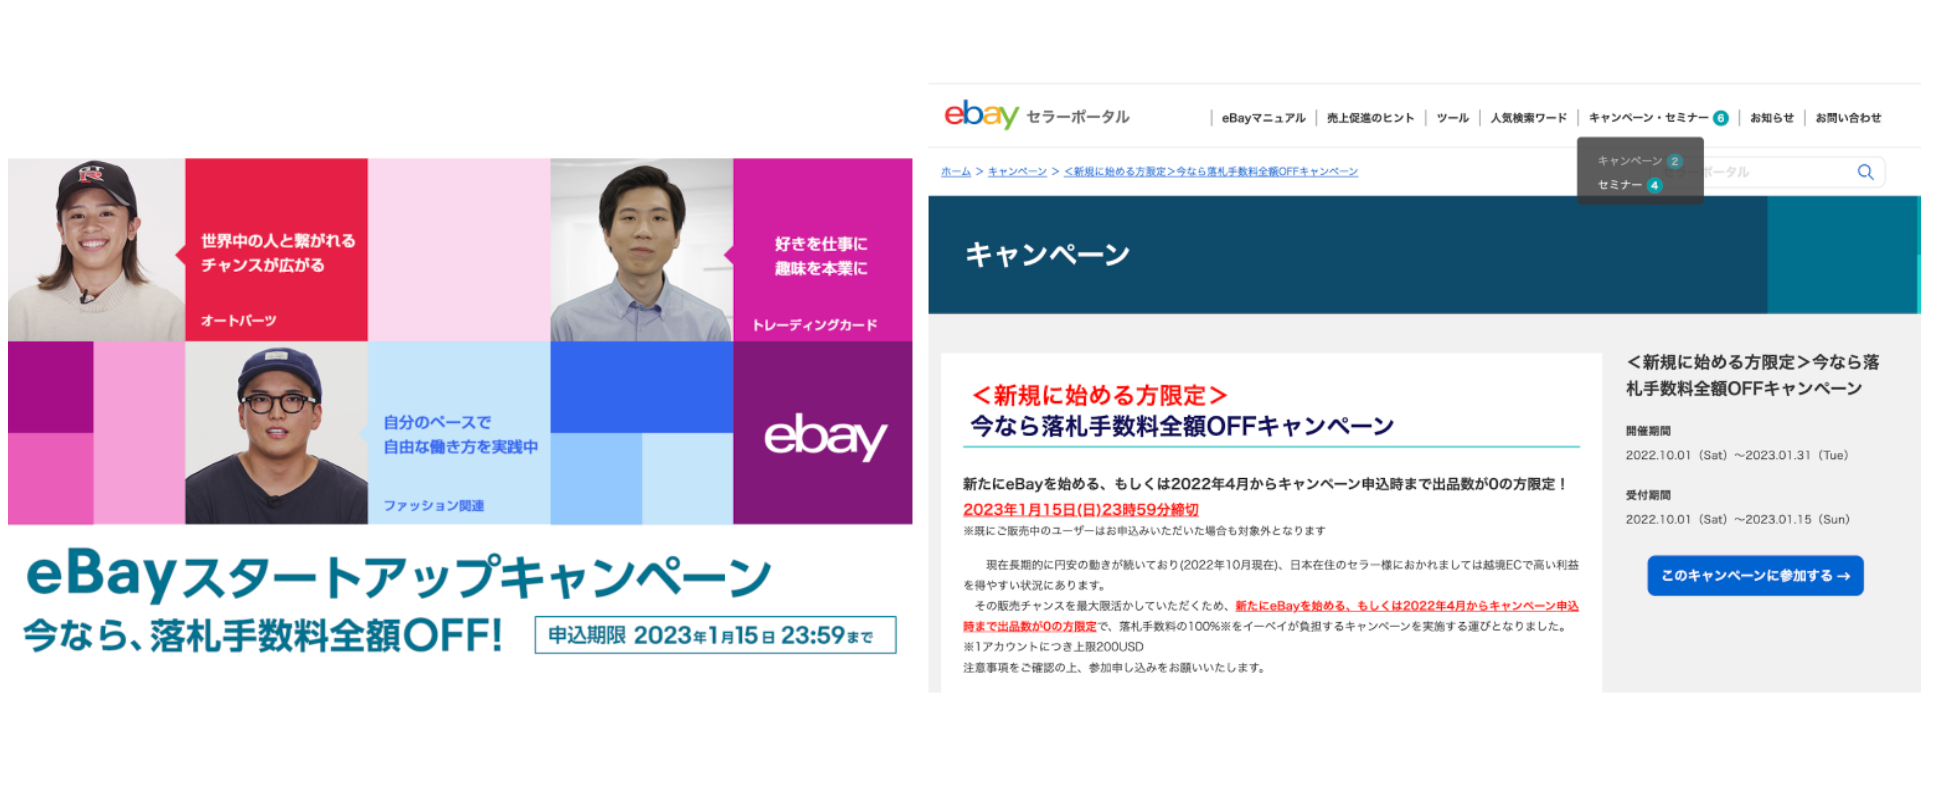 eBay スタートアップキャンペーン